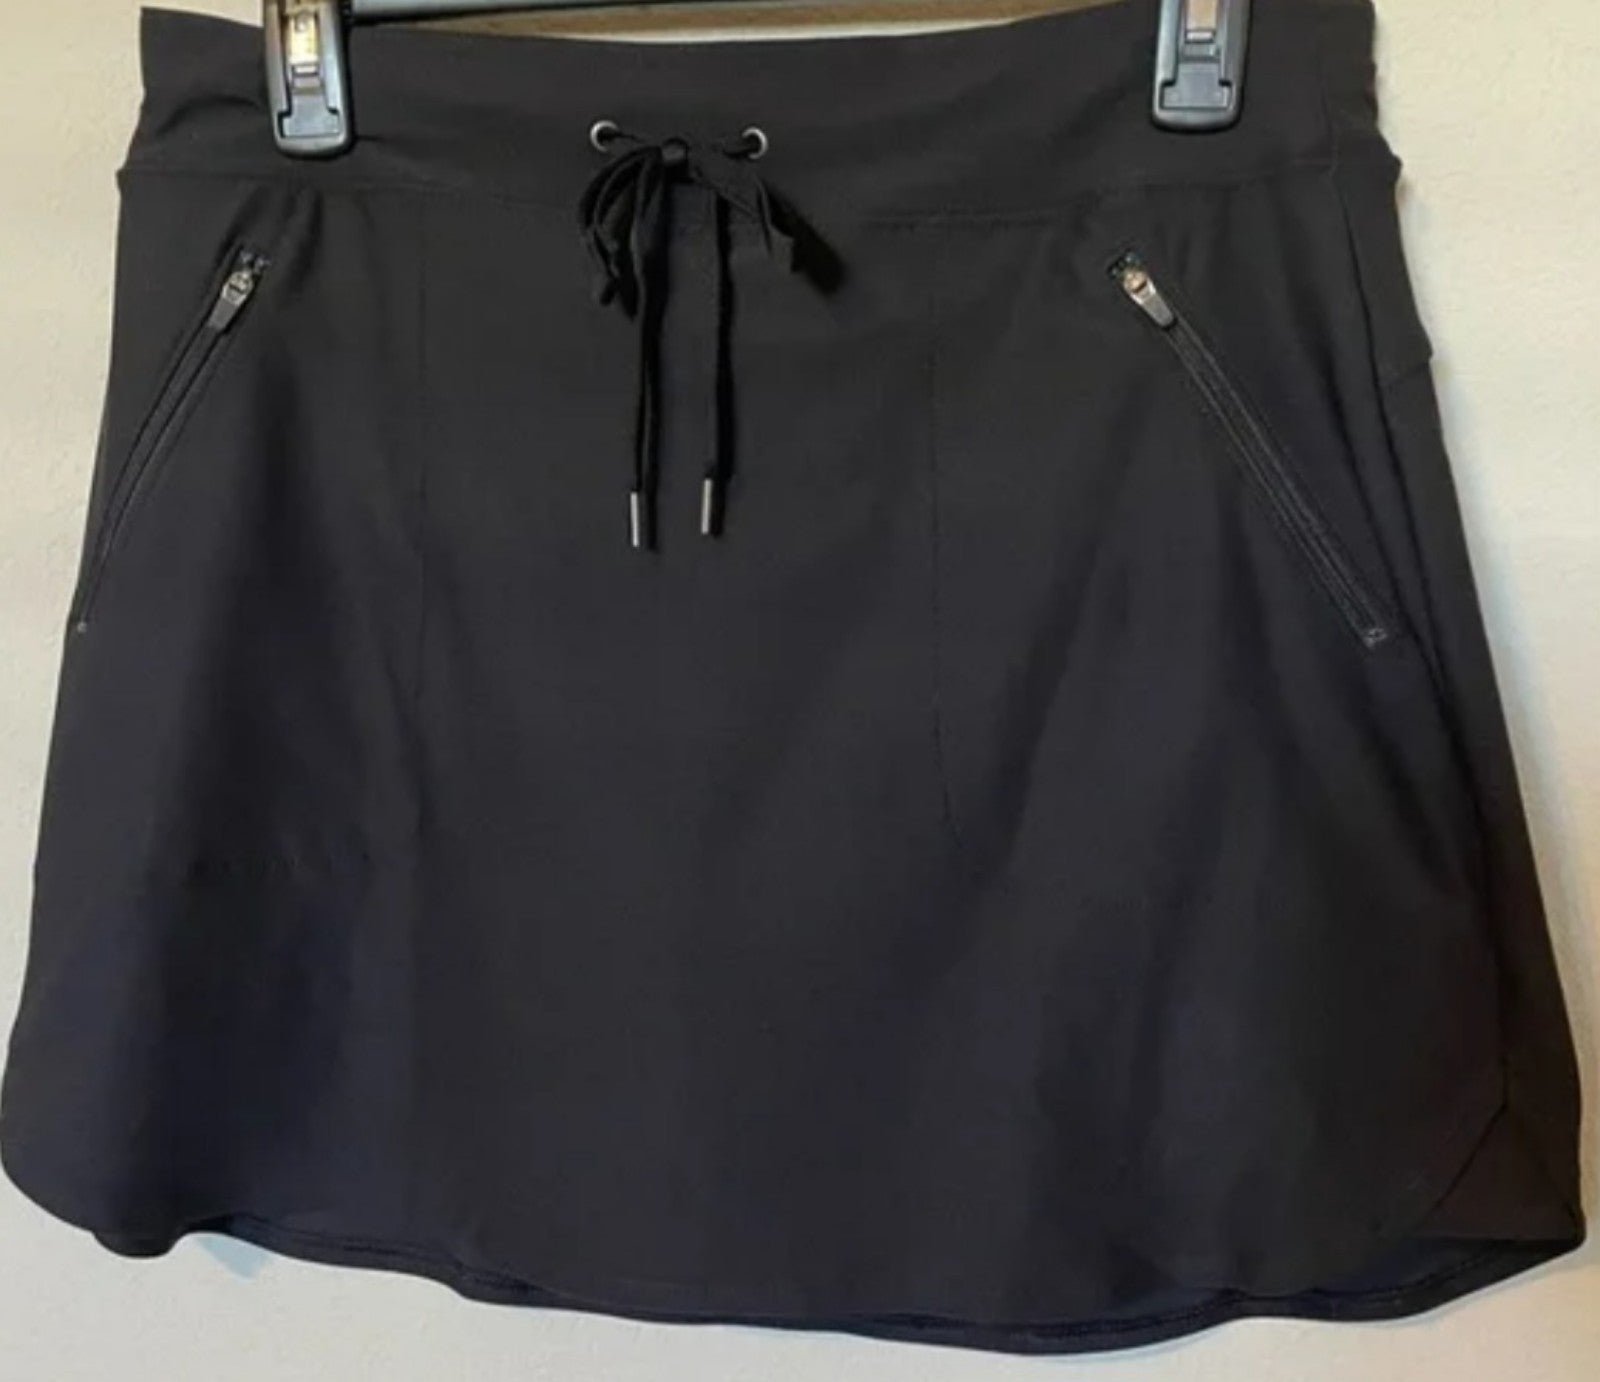 the Lowest price Dry Tek Gear Black Skort Size XXL New wo tags NcqOpjOIH Store Online